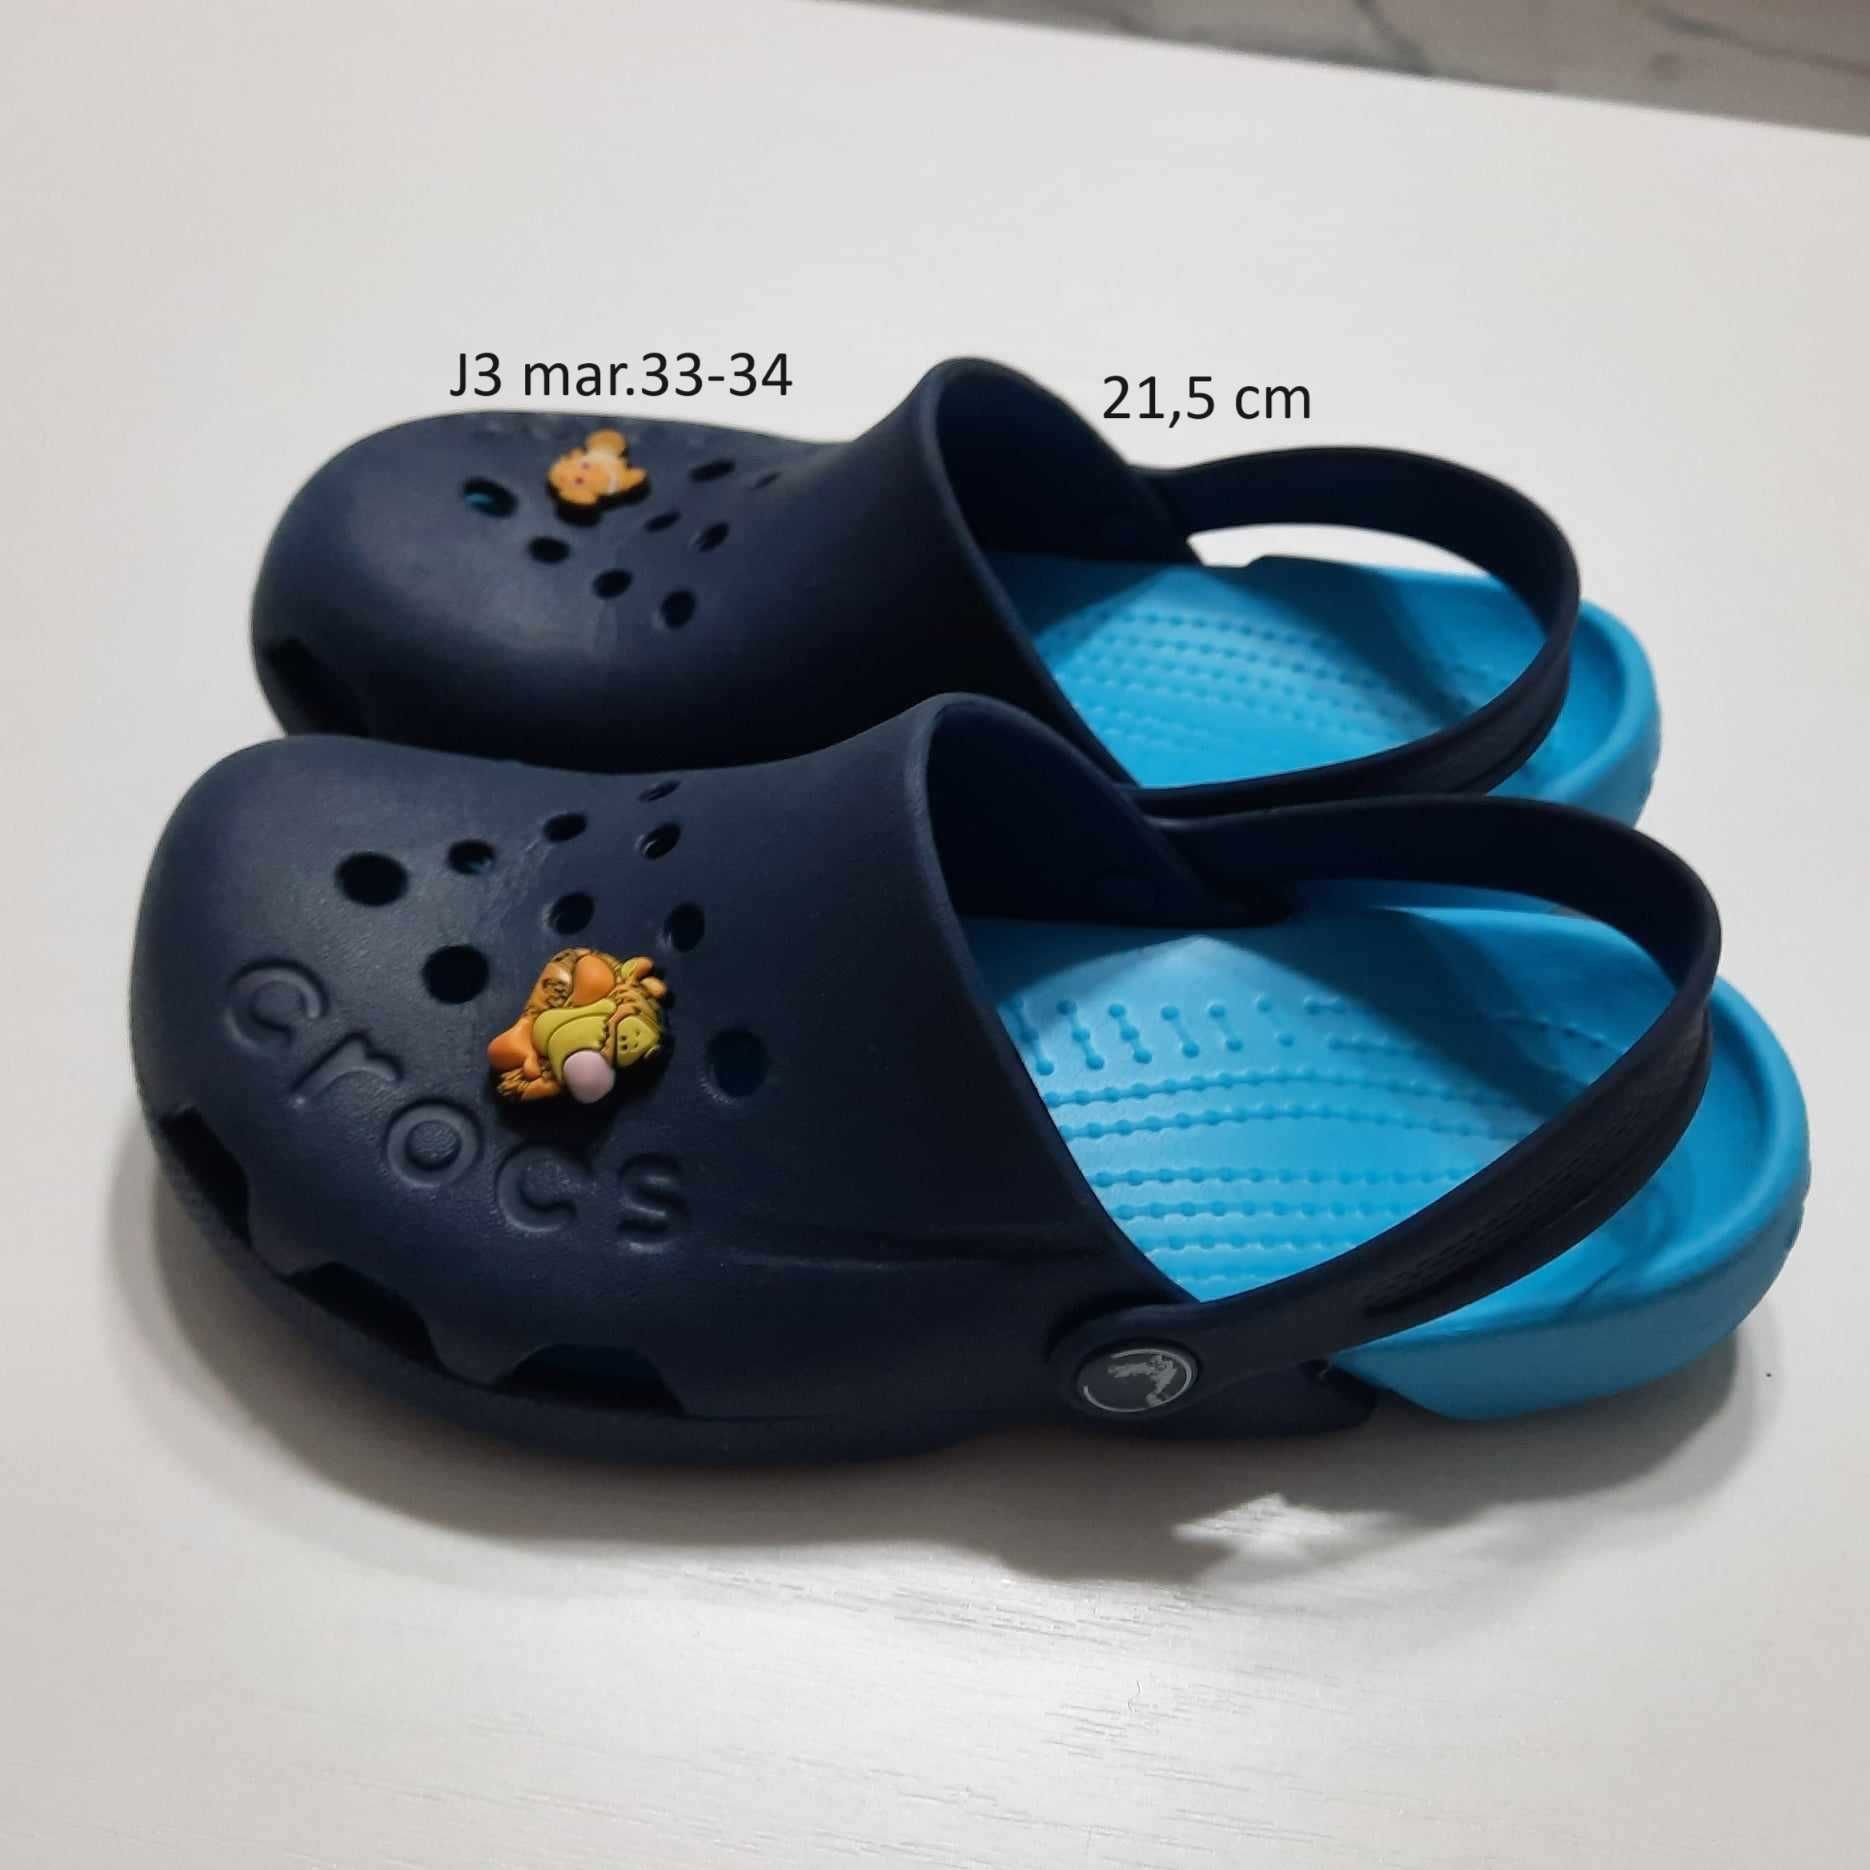 Sandale Crocs J3 mar.33-34